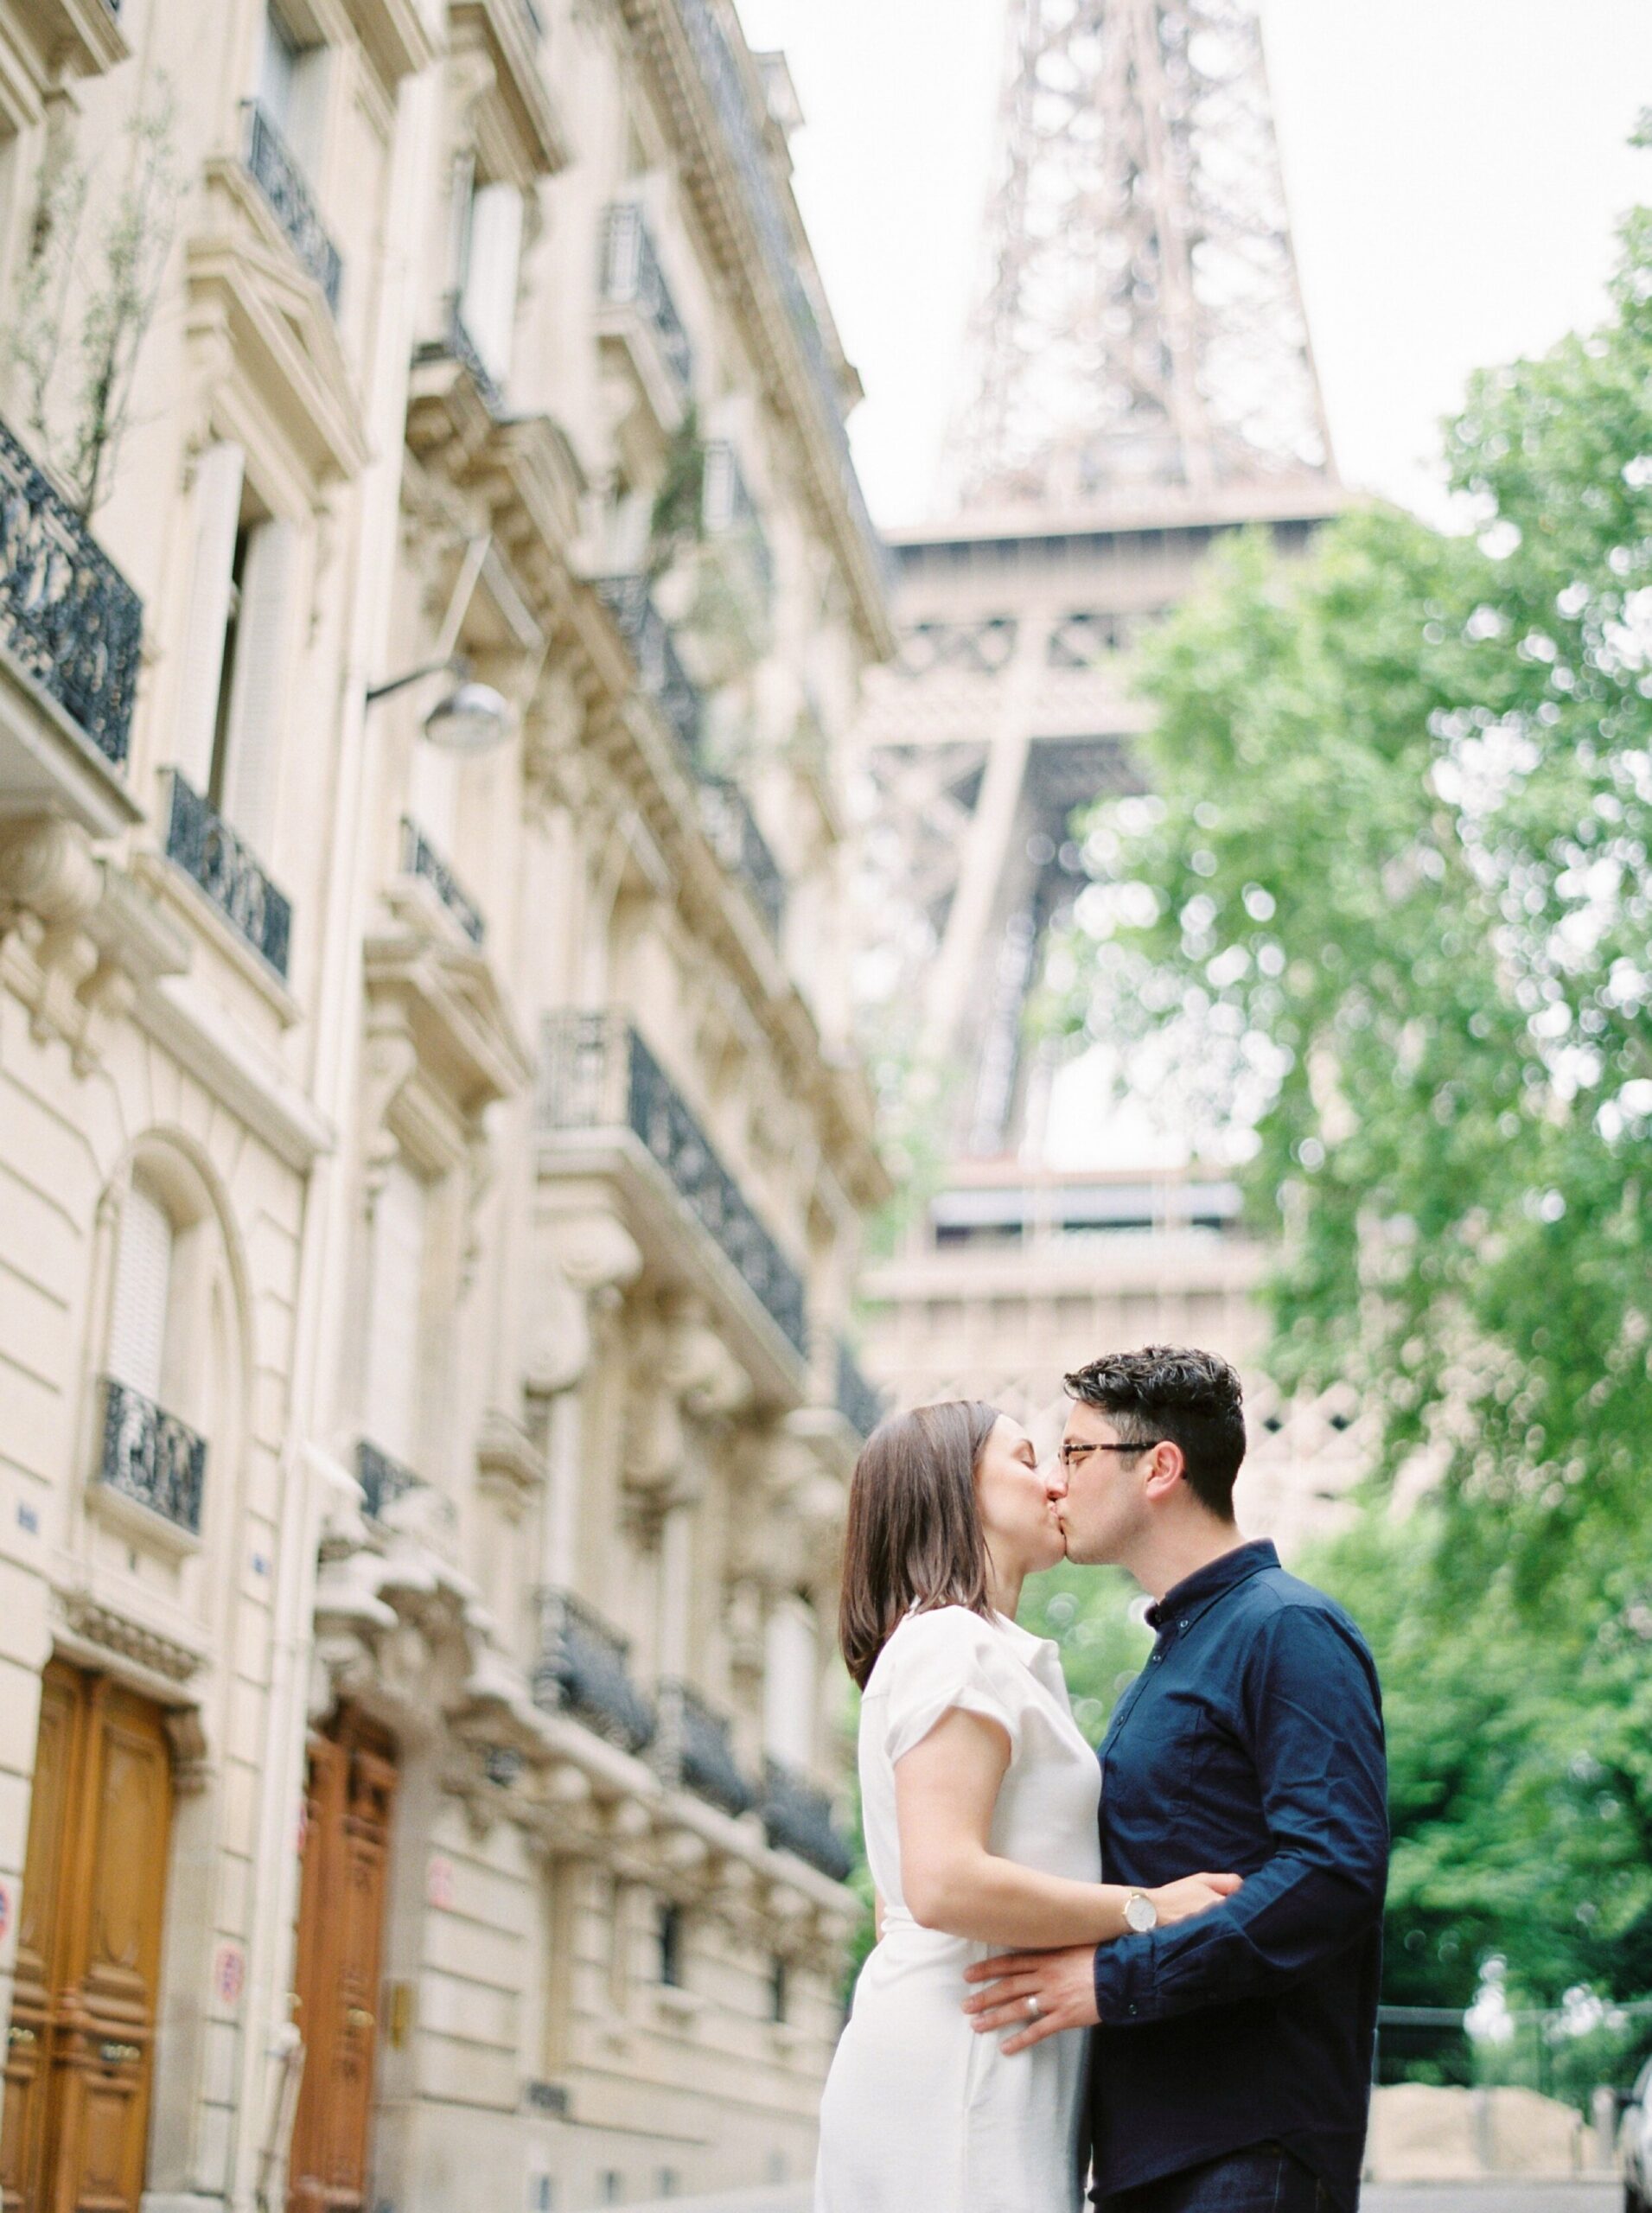  Paris anniversary couples session | couples pose ideas | fine art film paris wedding photographer Justine Milton 